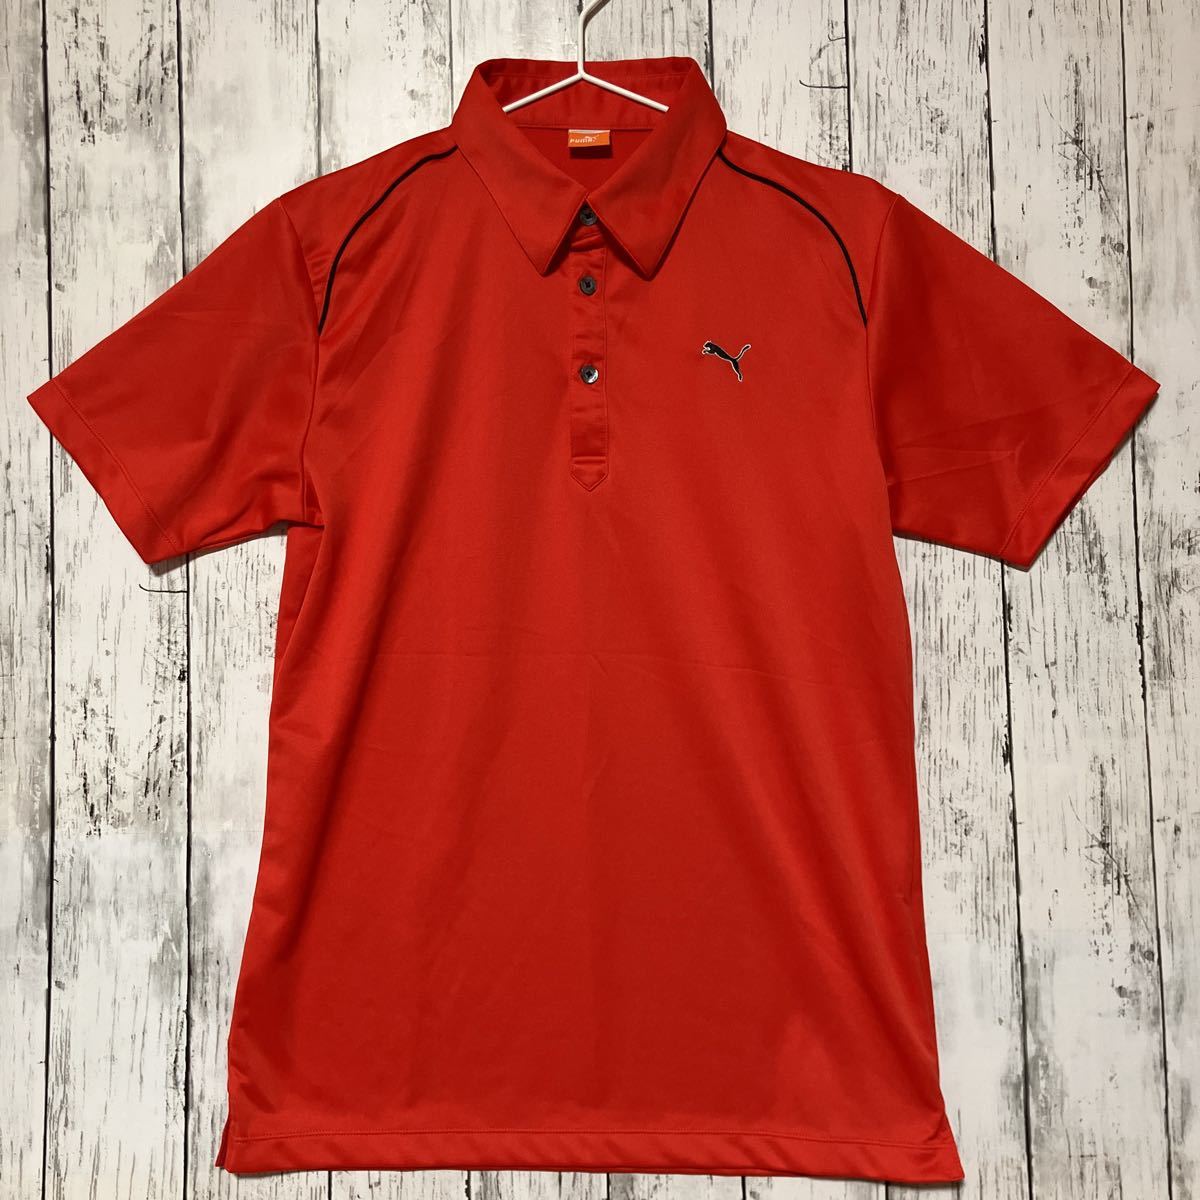 PUMA GOLF】プーマゴルフ メンズ 半袖ポロシャツ Mサイズ 赤 送料無料